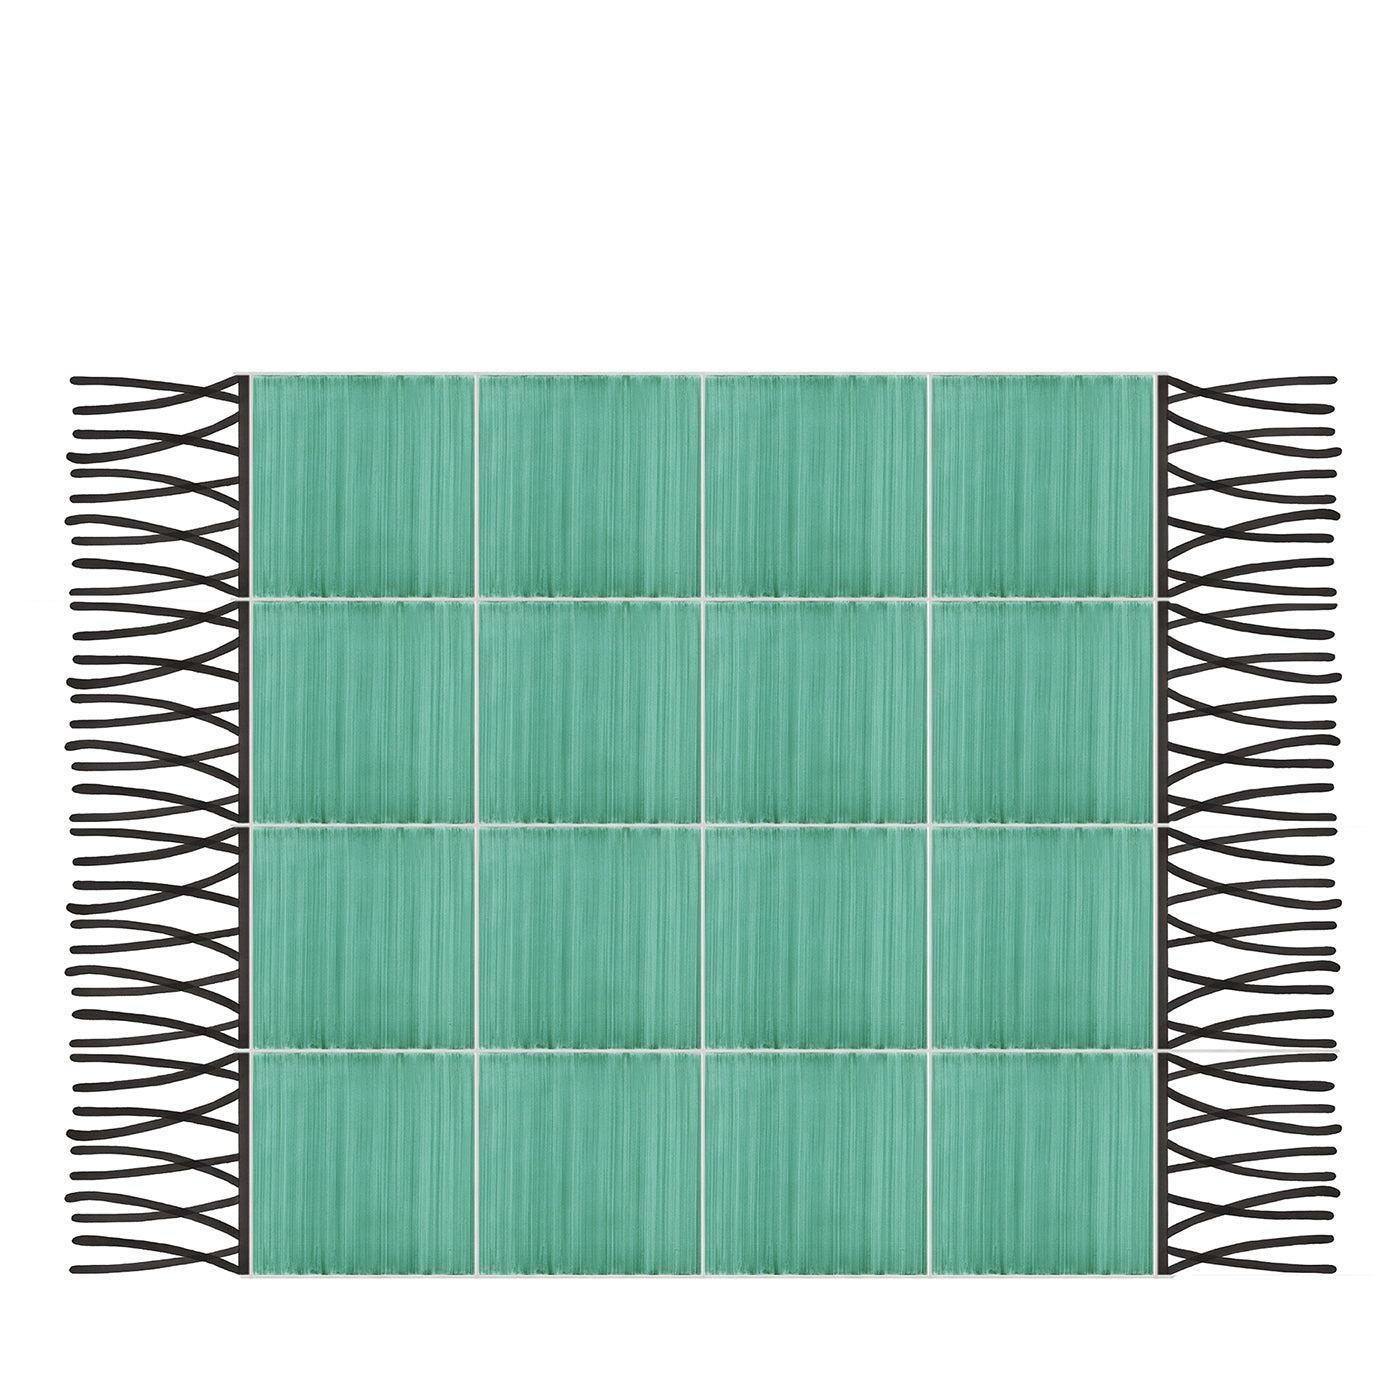 Teppich Total Grün Keramische Komposition von Giuliano Andrea dell'Uva 120 X 80 - Hauptansicht